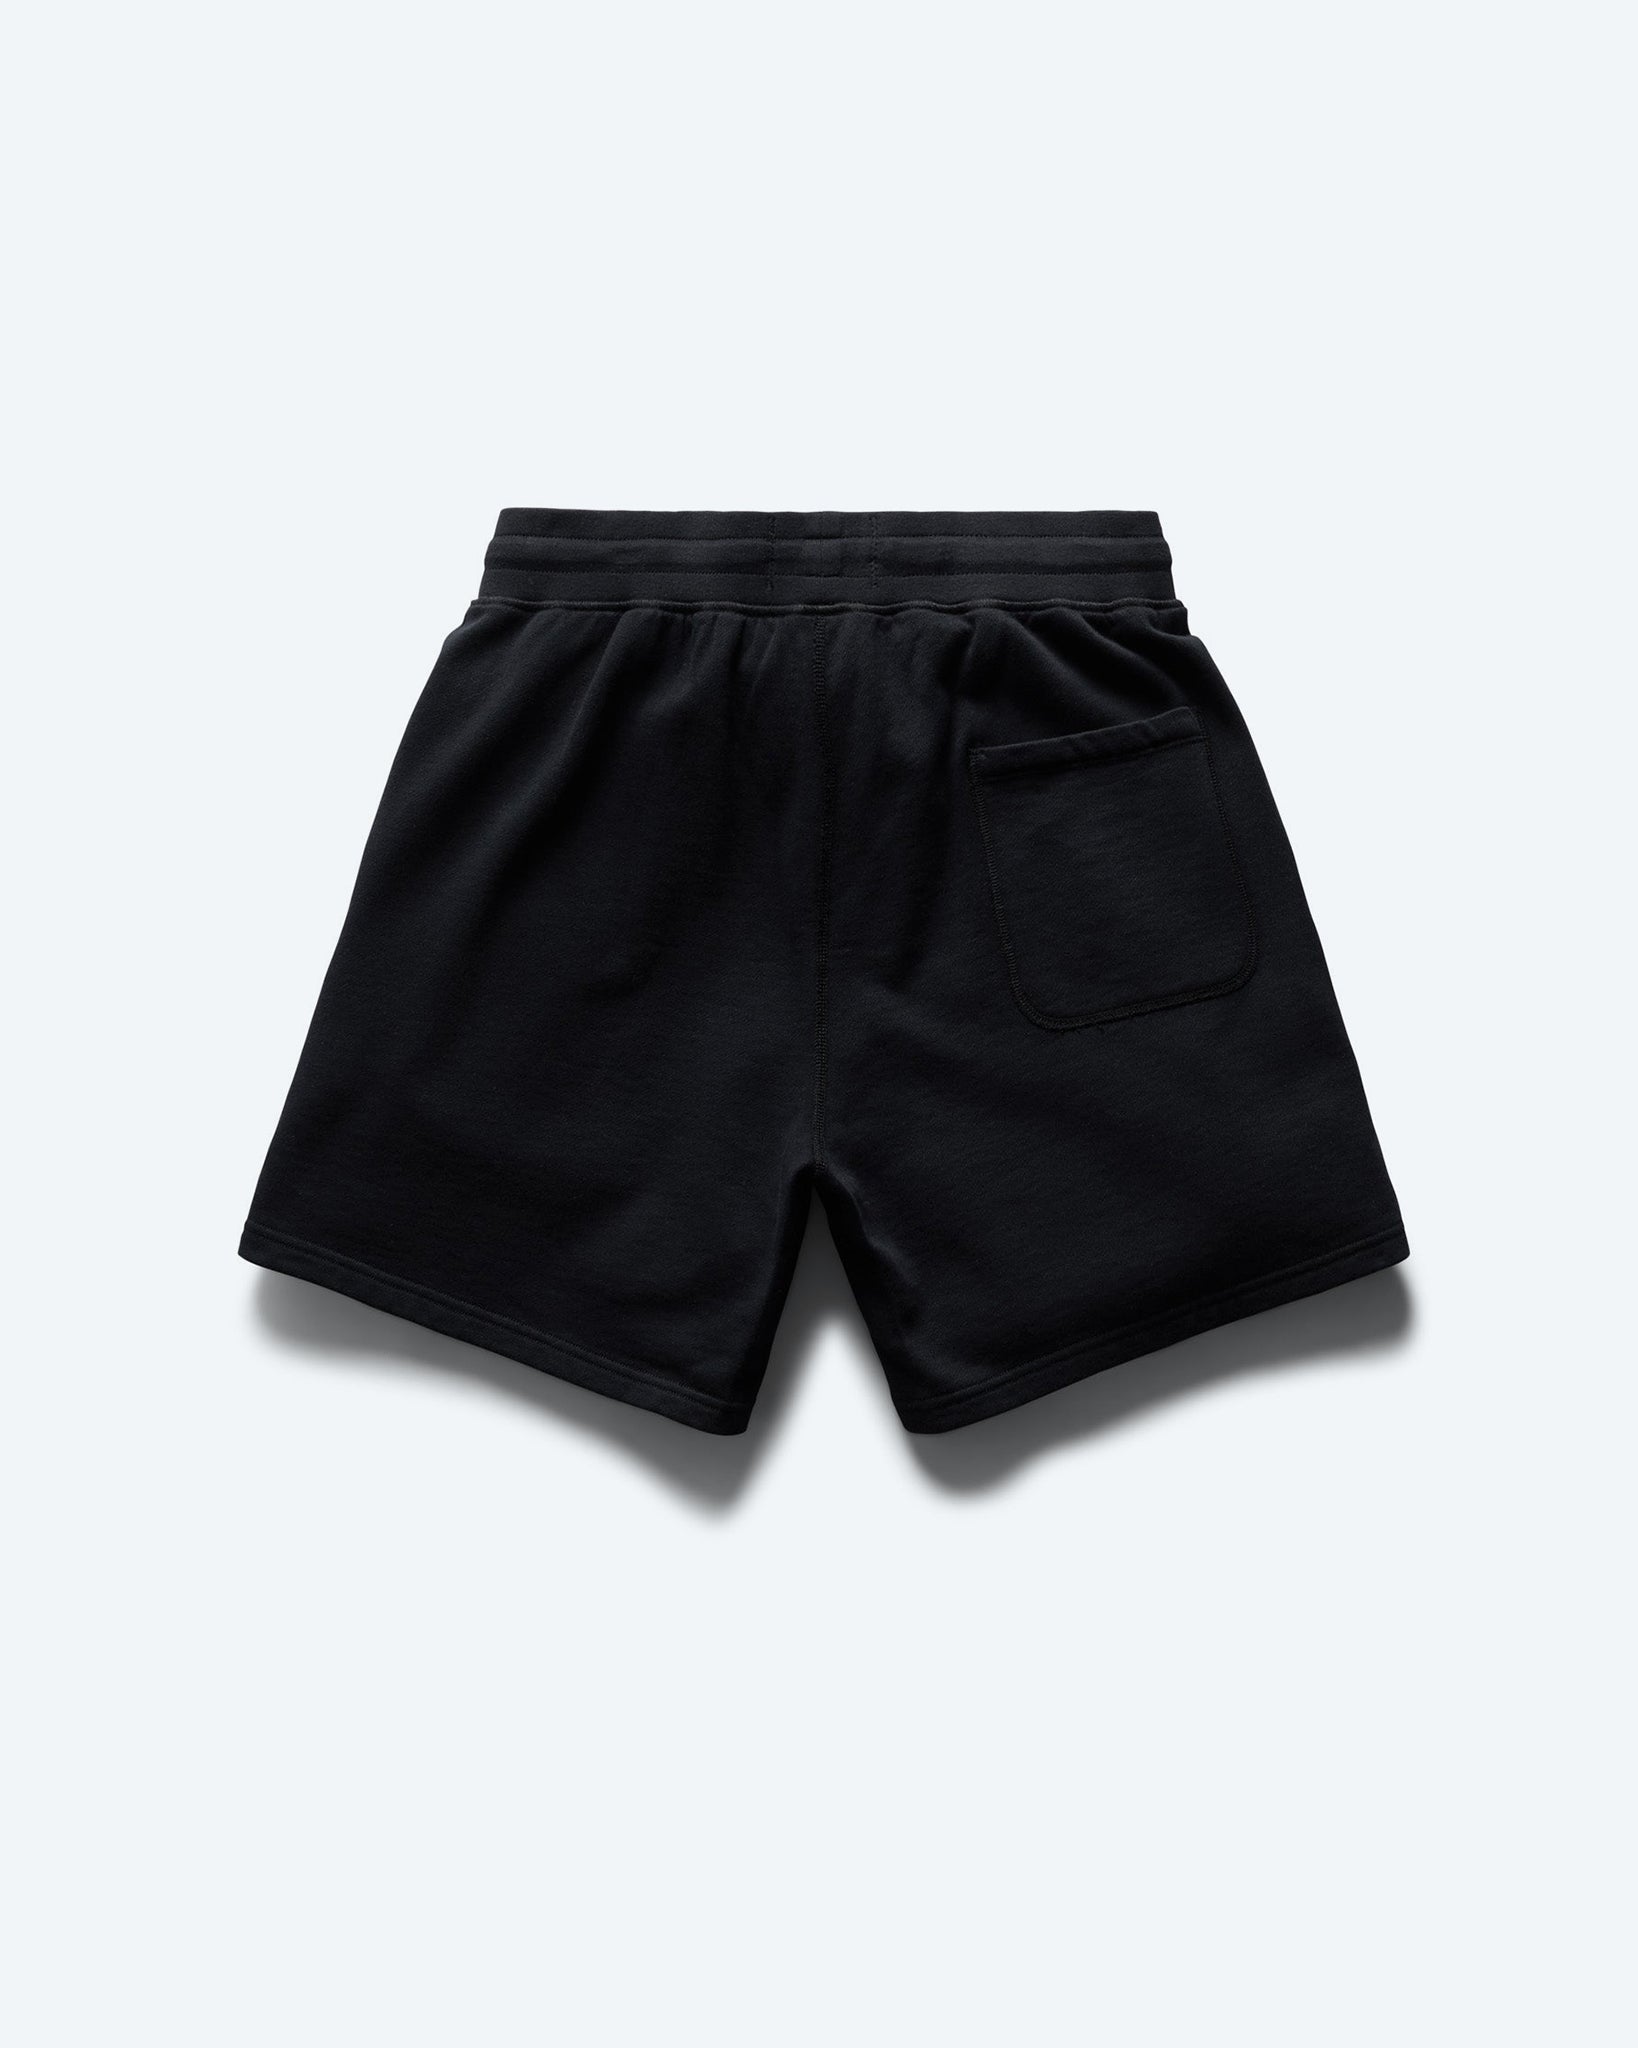 Stretch Knit Shorts (5 inseam) (Black)